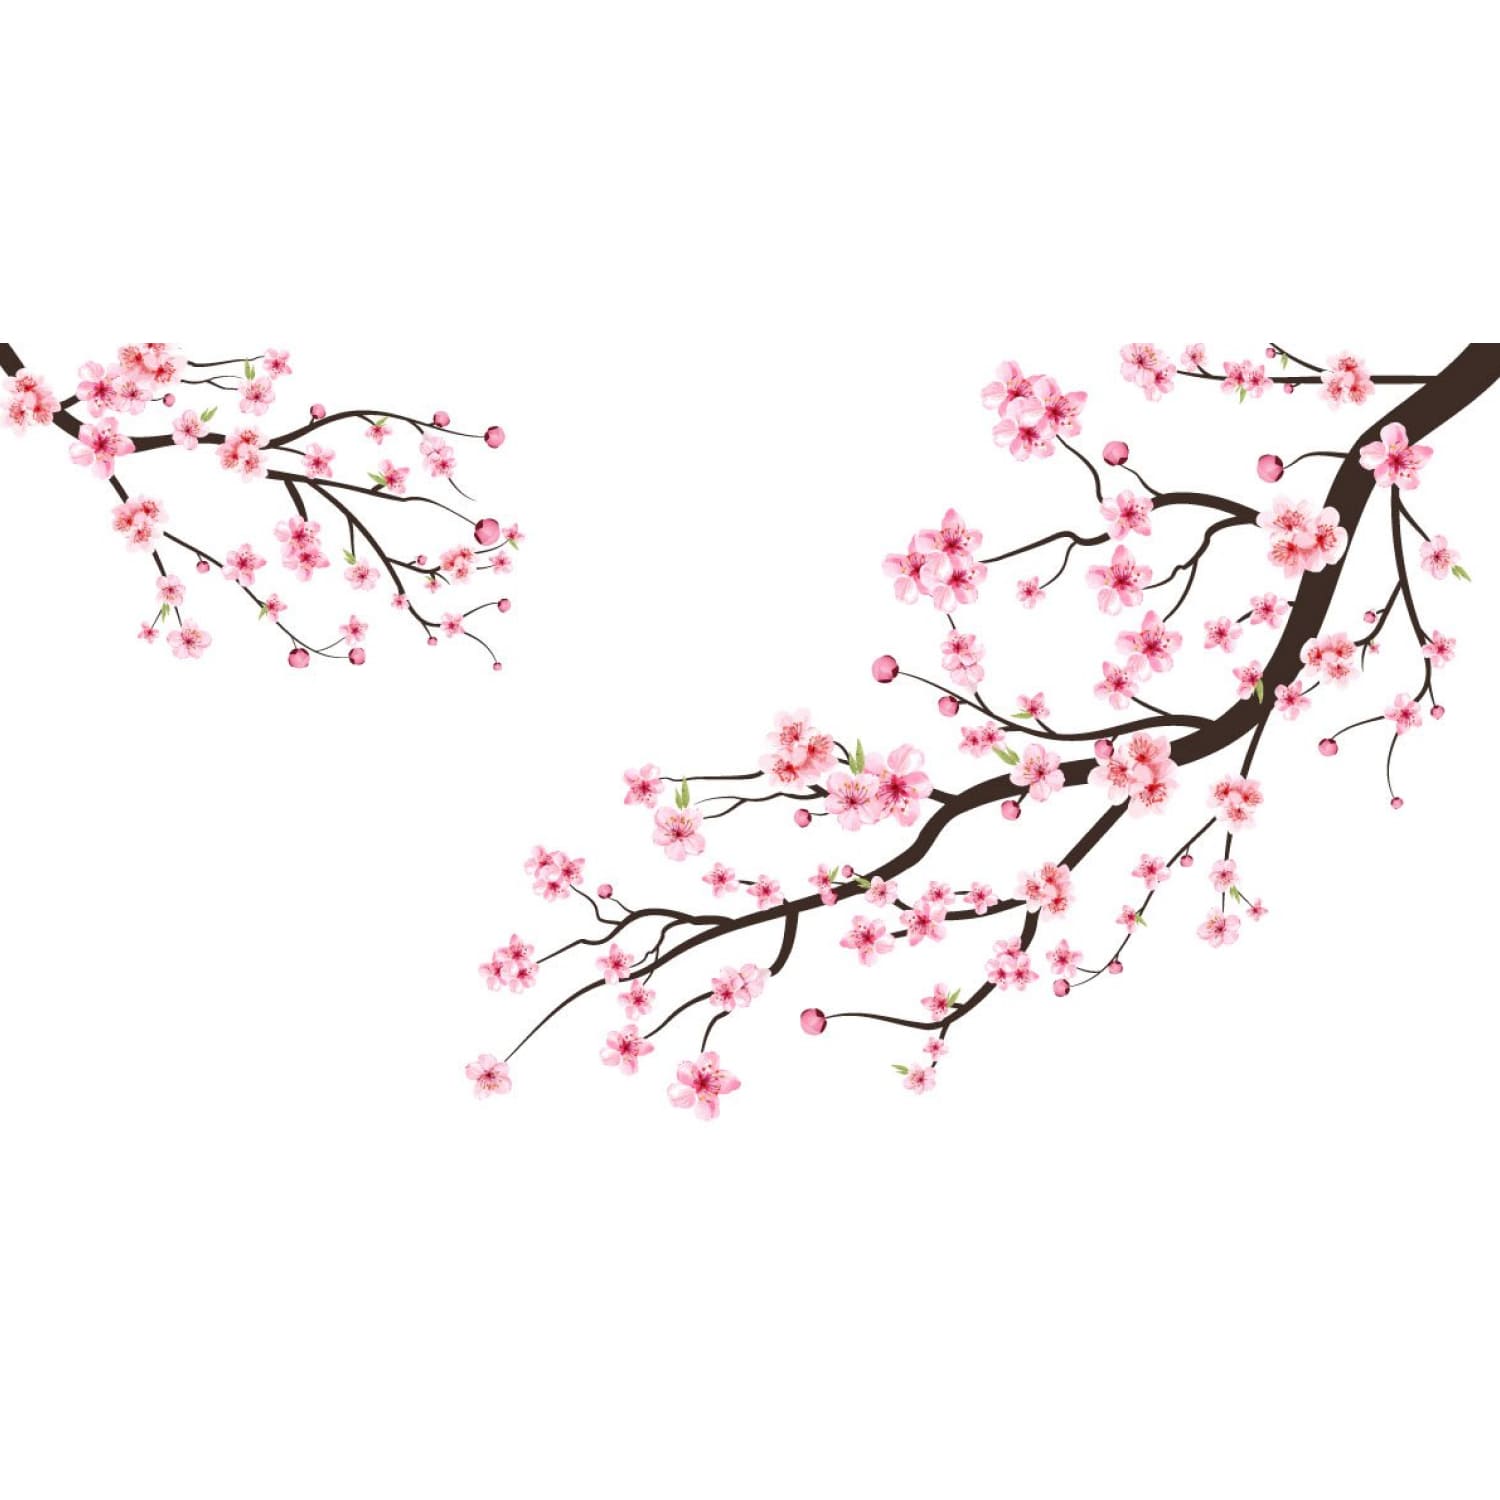 Cherry Blossom with Sakura Branch cover.